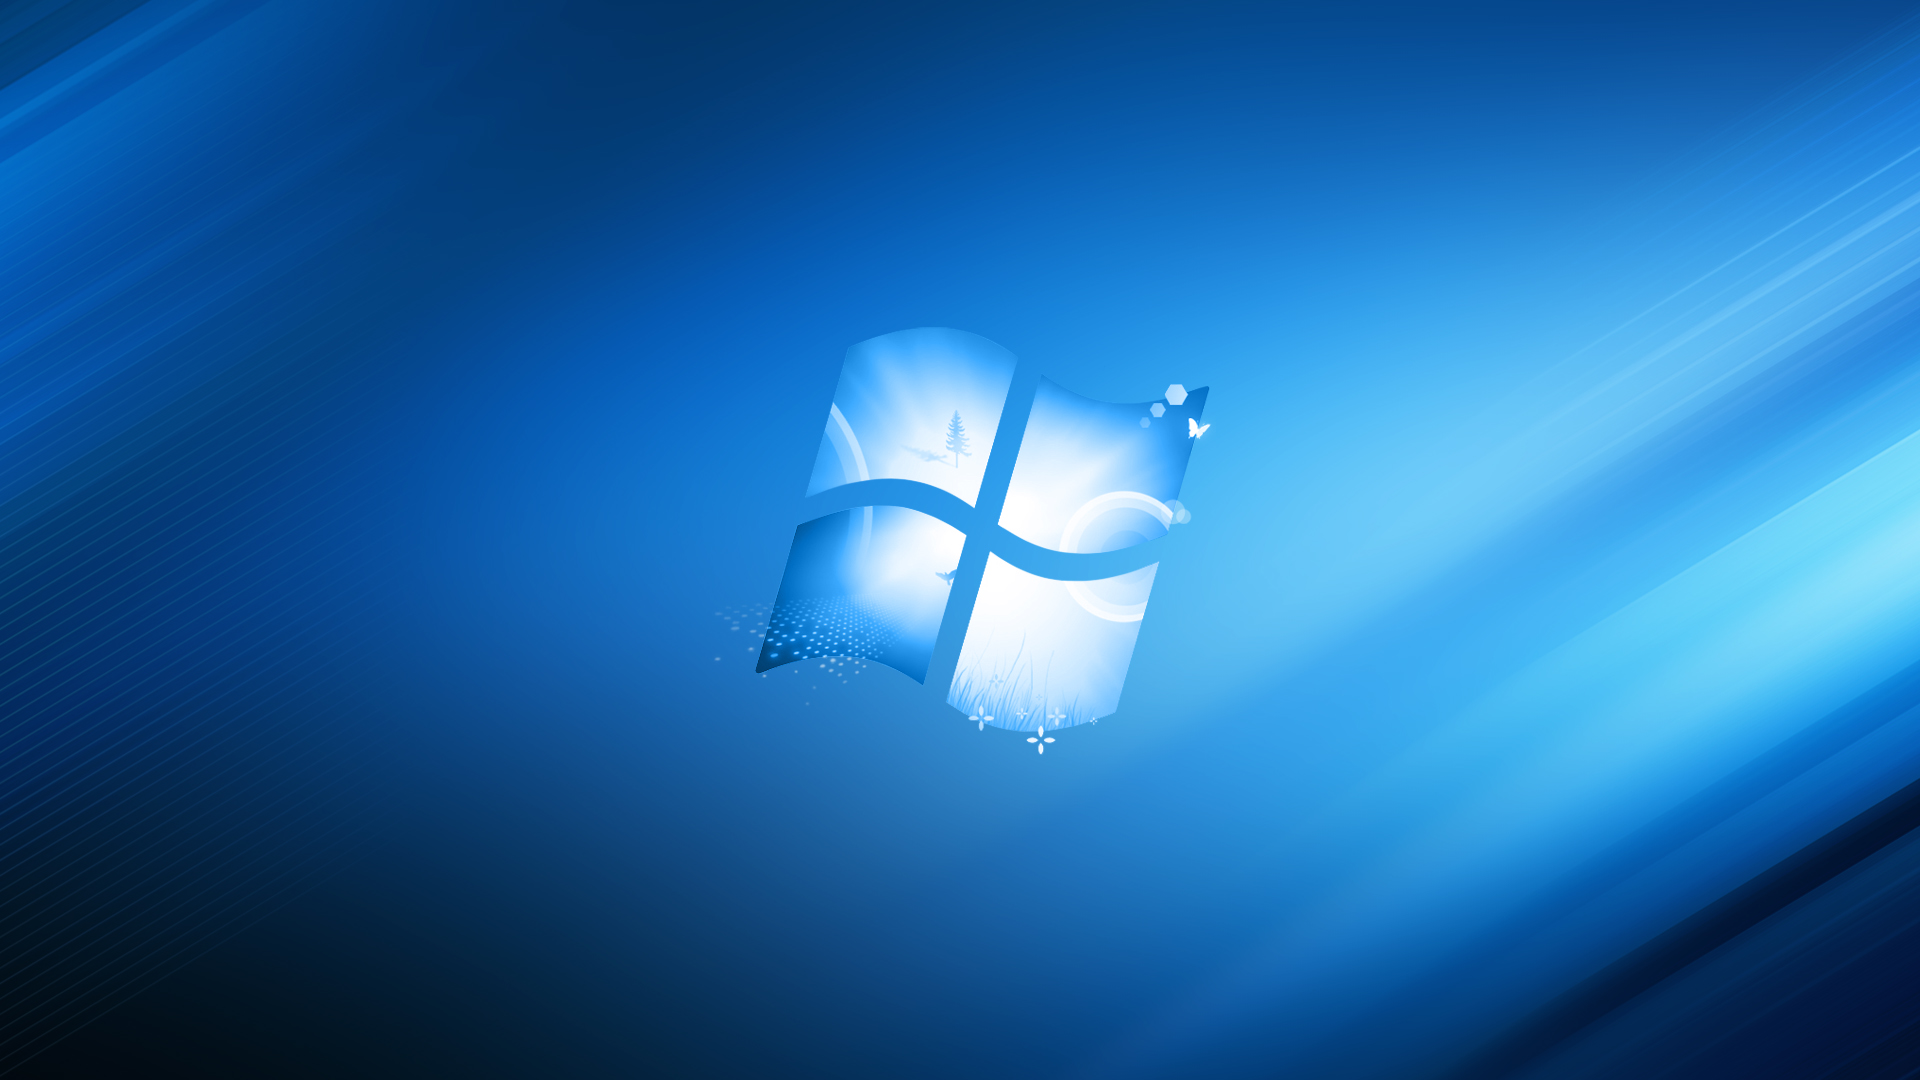 Windows 8 Wallpaper Download